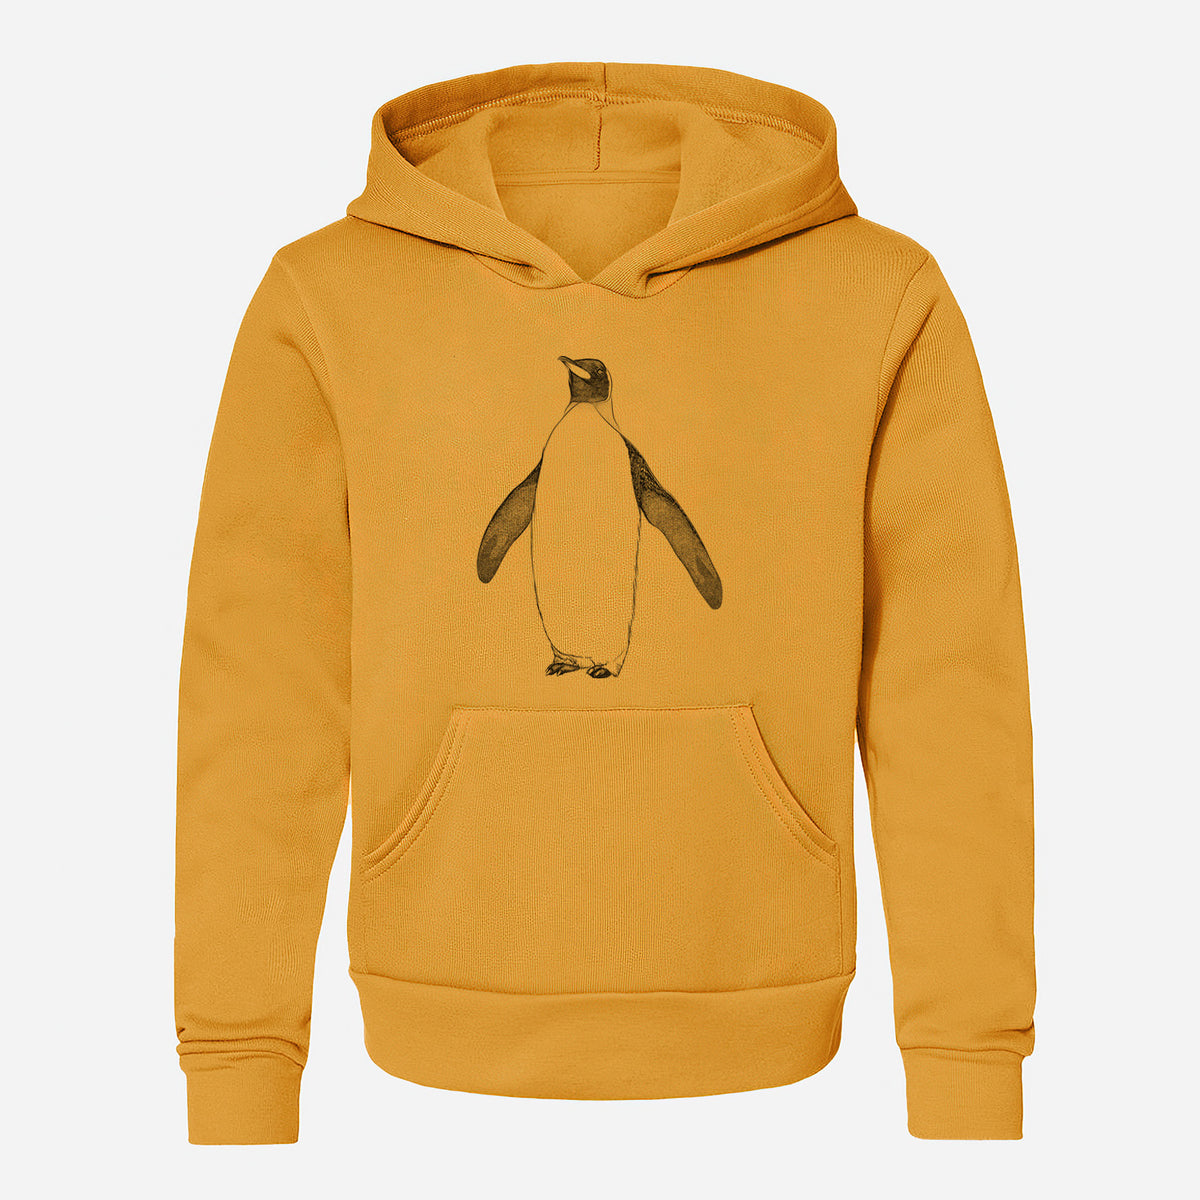 Emperor Penguin - Aptenodytes forsteri - Youth Hoodie Sweatshirt